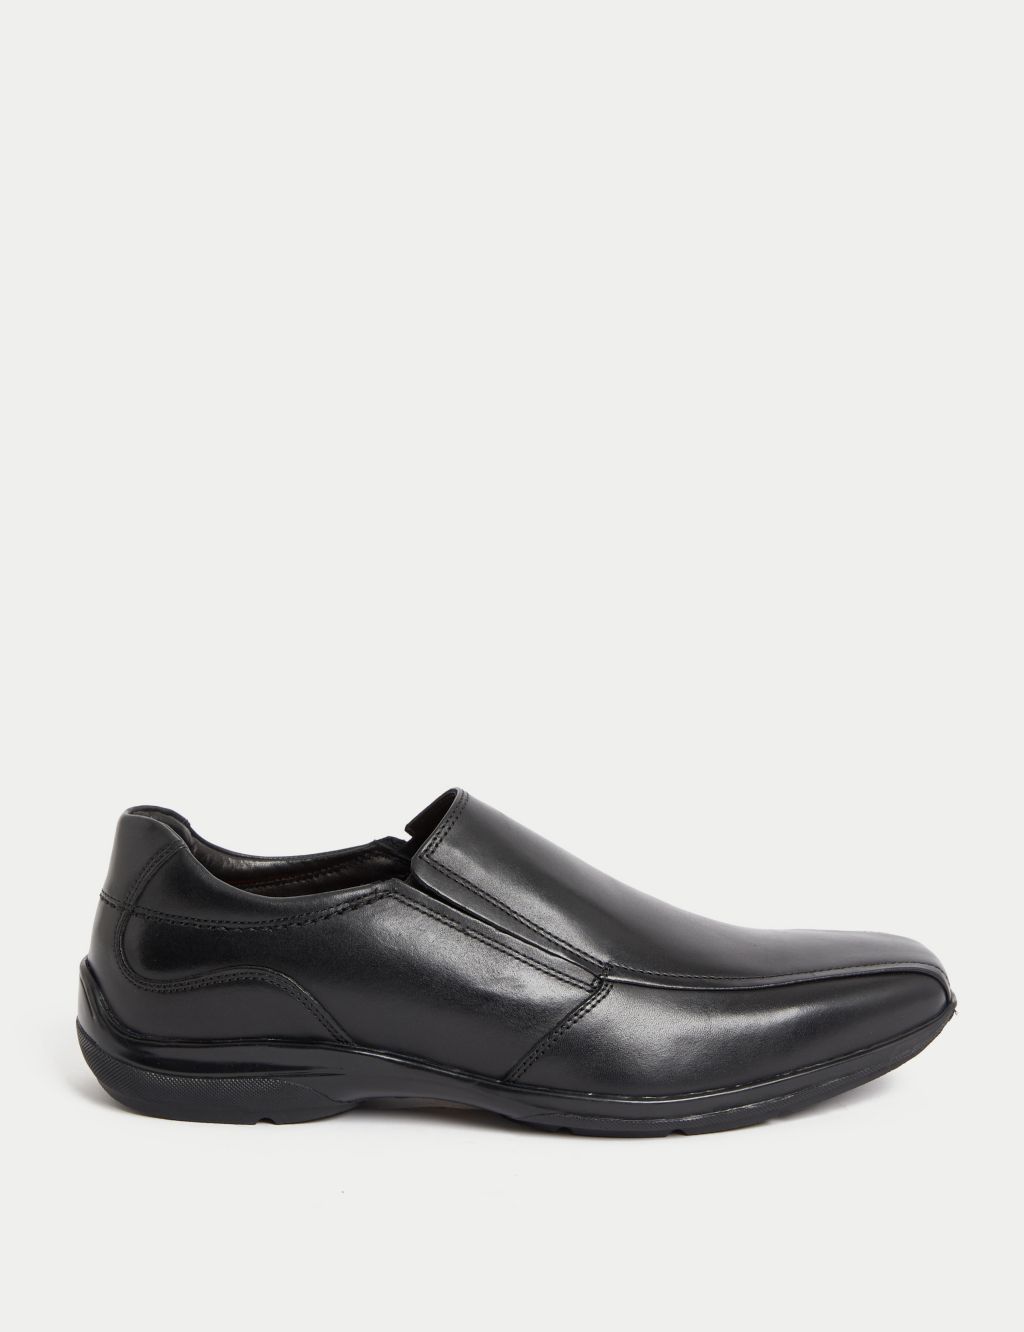 Airflex™ Leather Slip-on Shoes image 1